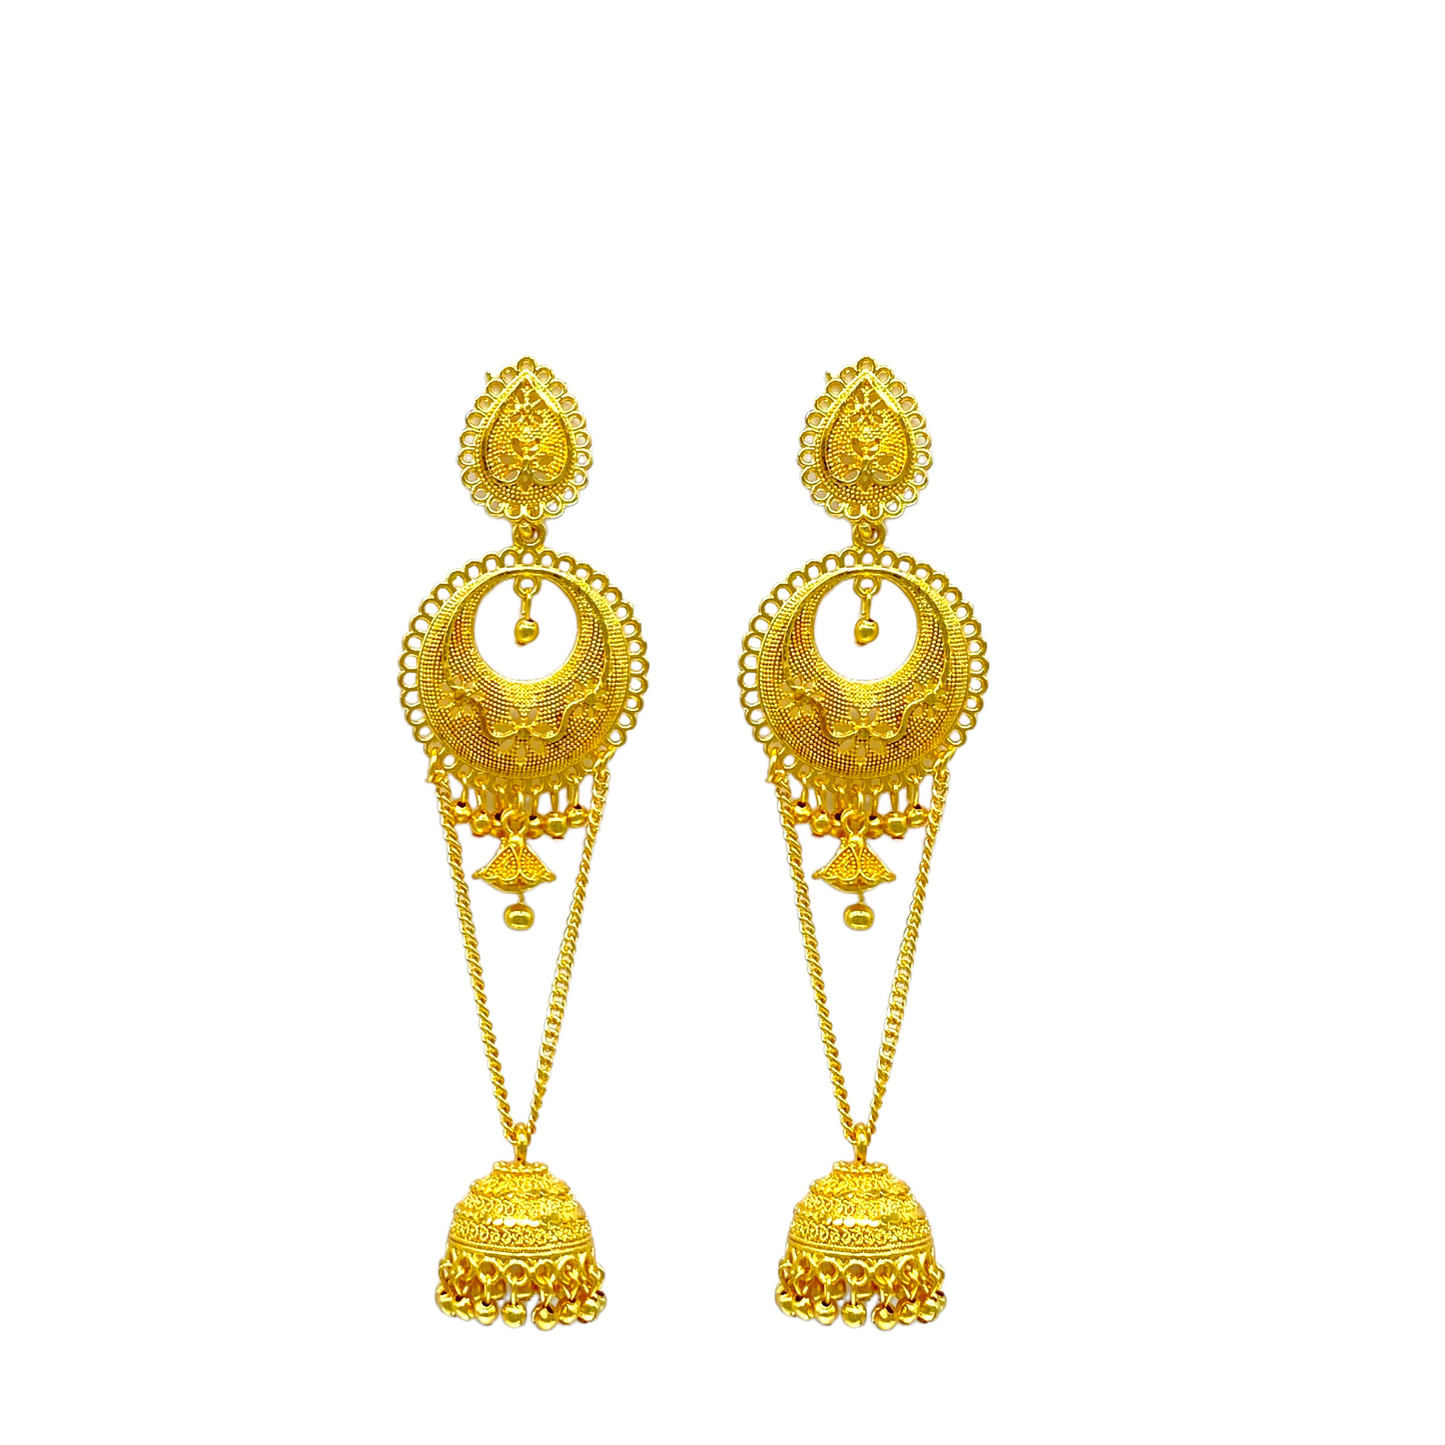 Gold Chandbali Earrings with chain hanging and zumkhi